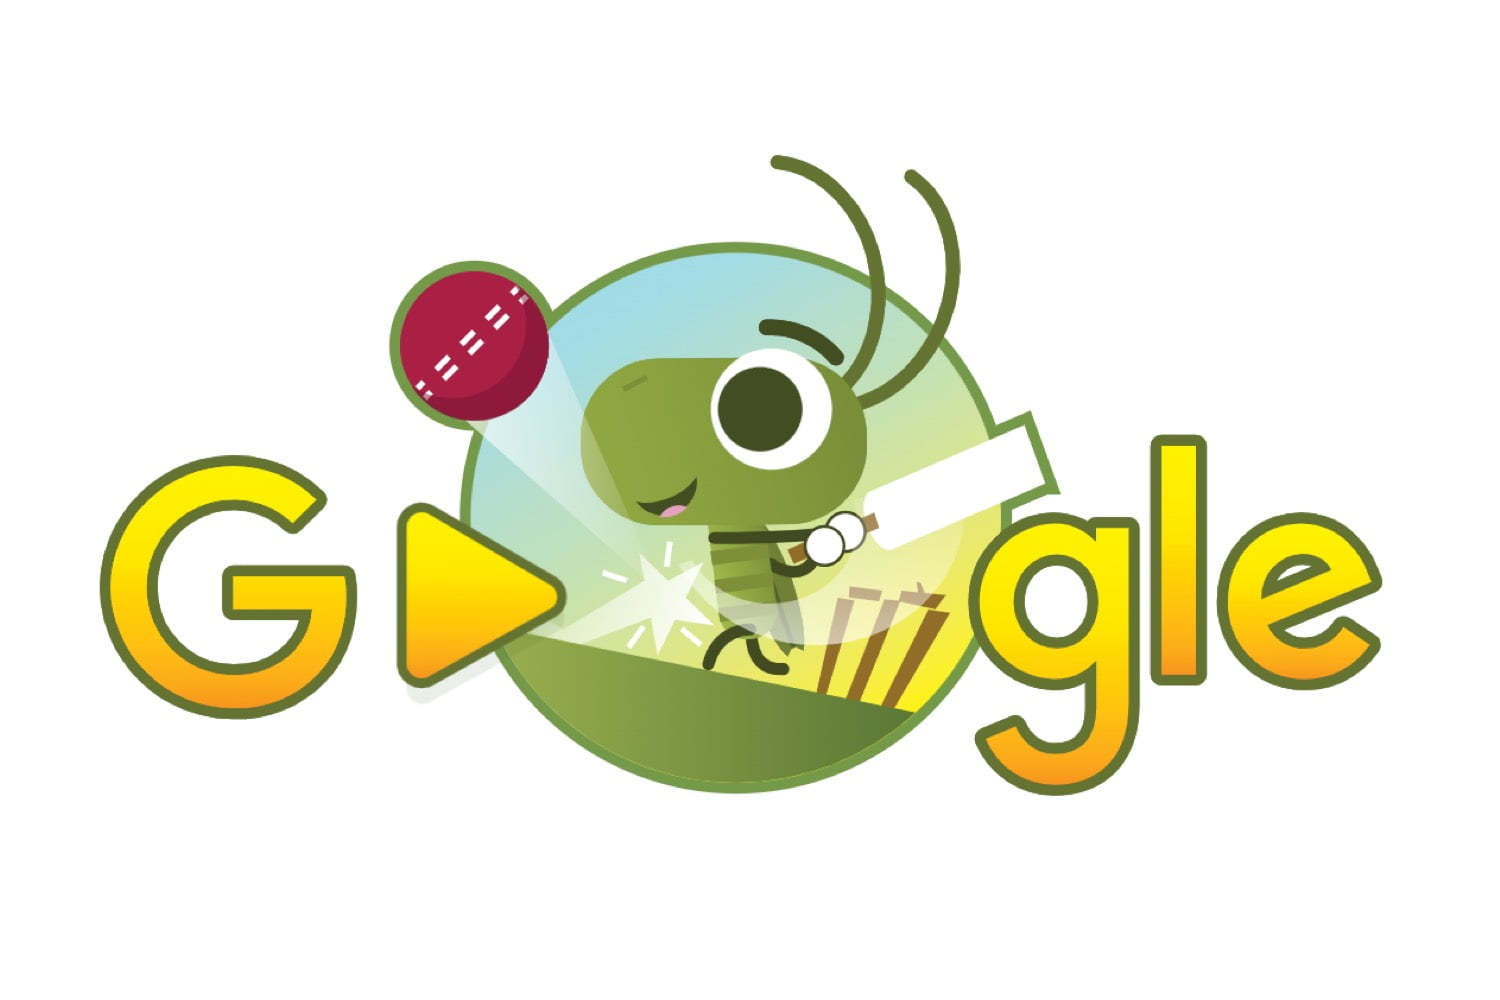 Google Cricket Juego Online - Marketing Branding